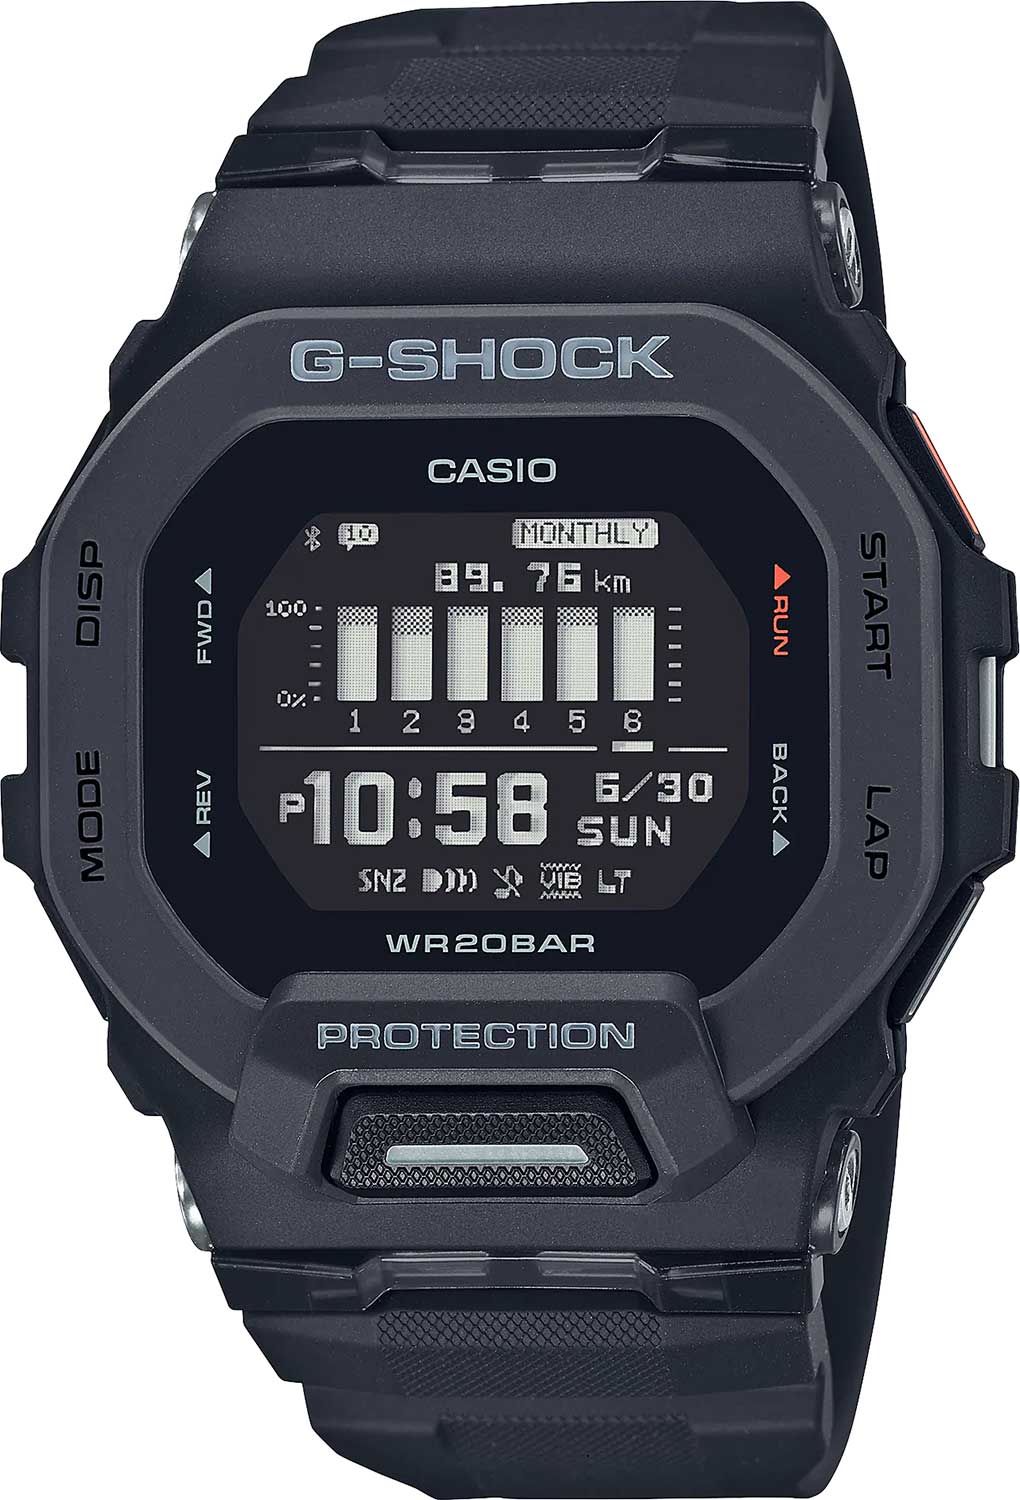     Casio G-SHOCK GBD-200-1ER  